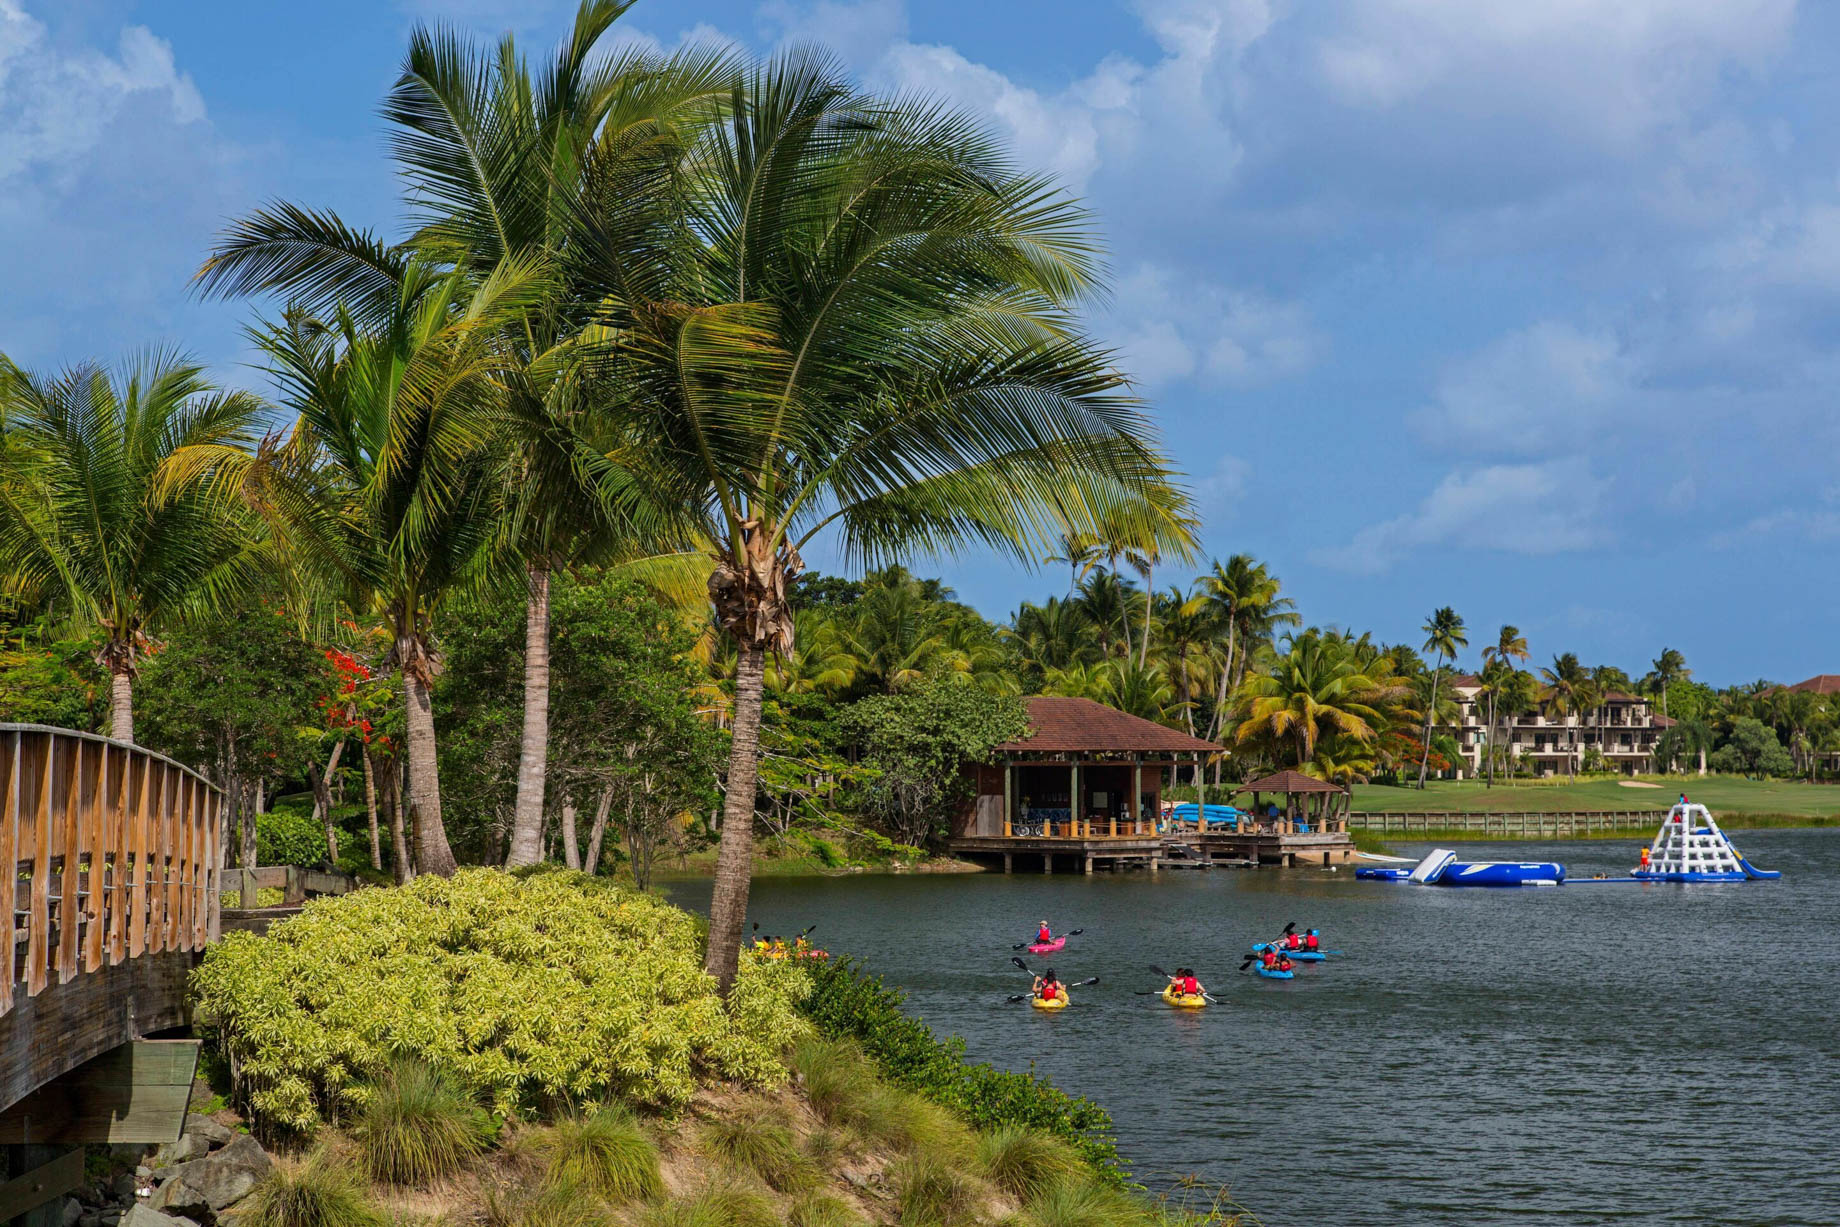 The St. Regis Bahia Beach Resort – Rio Grande, Puerto Rico – Boat House